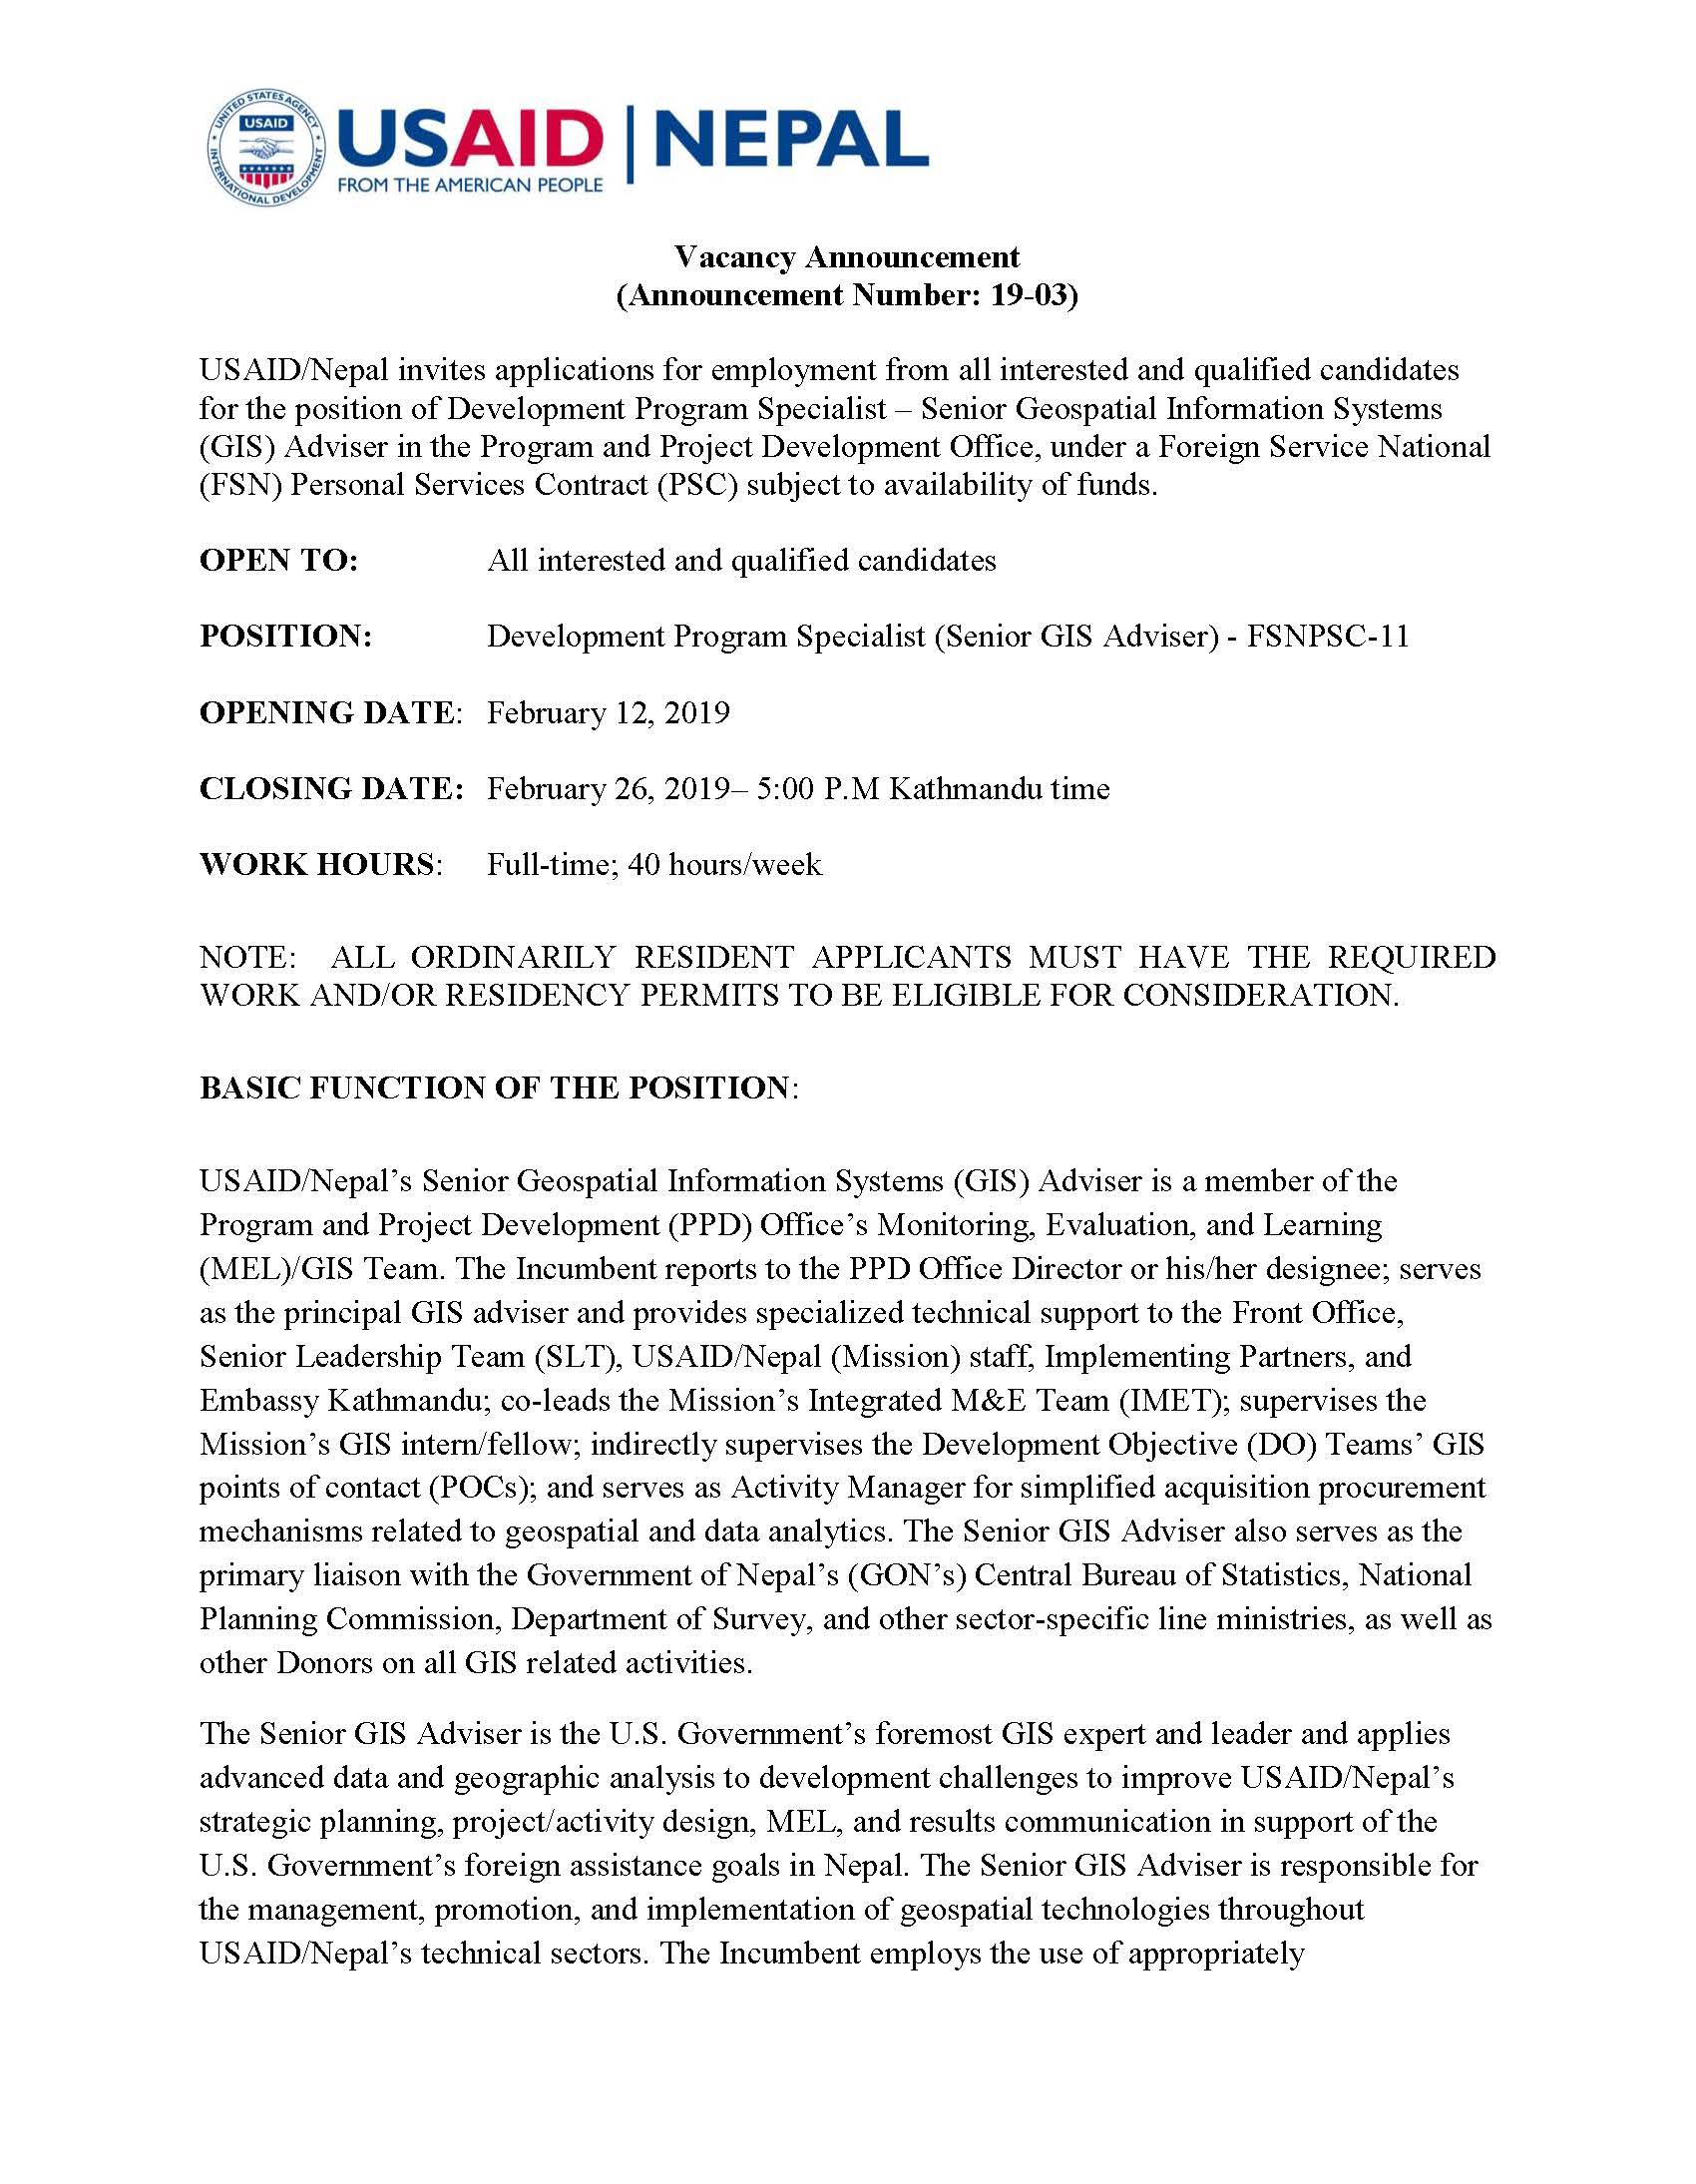 Vacancy Announcement # 19-03: Development Program Specialist (Senior GIS Adviser) - FSNPSC-11